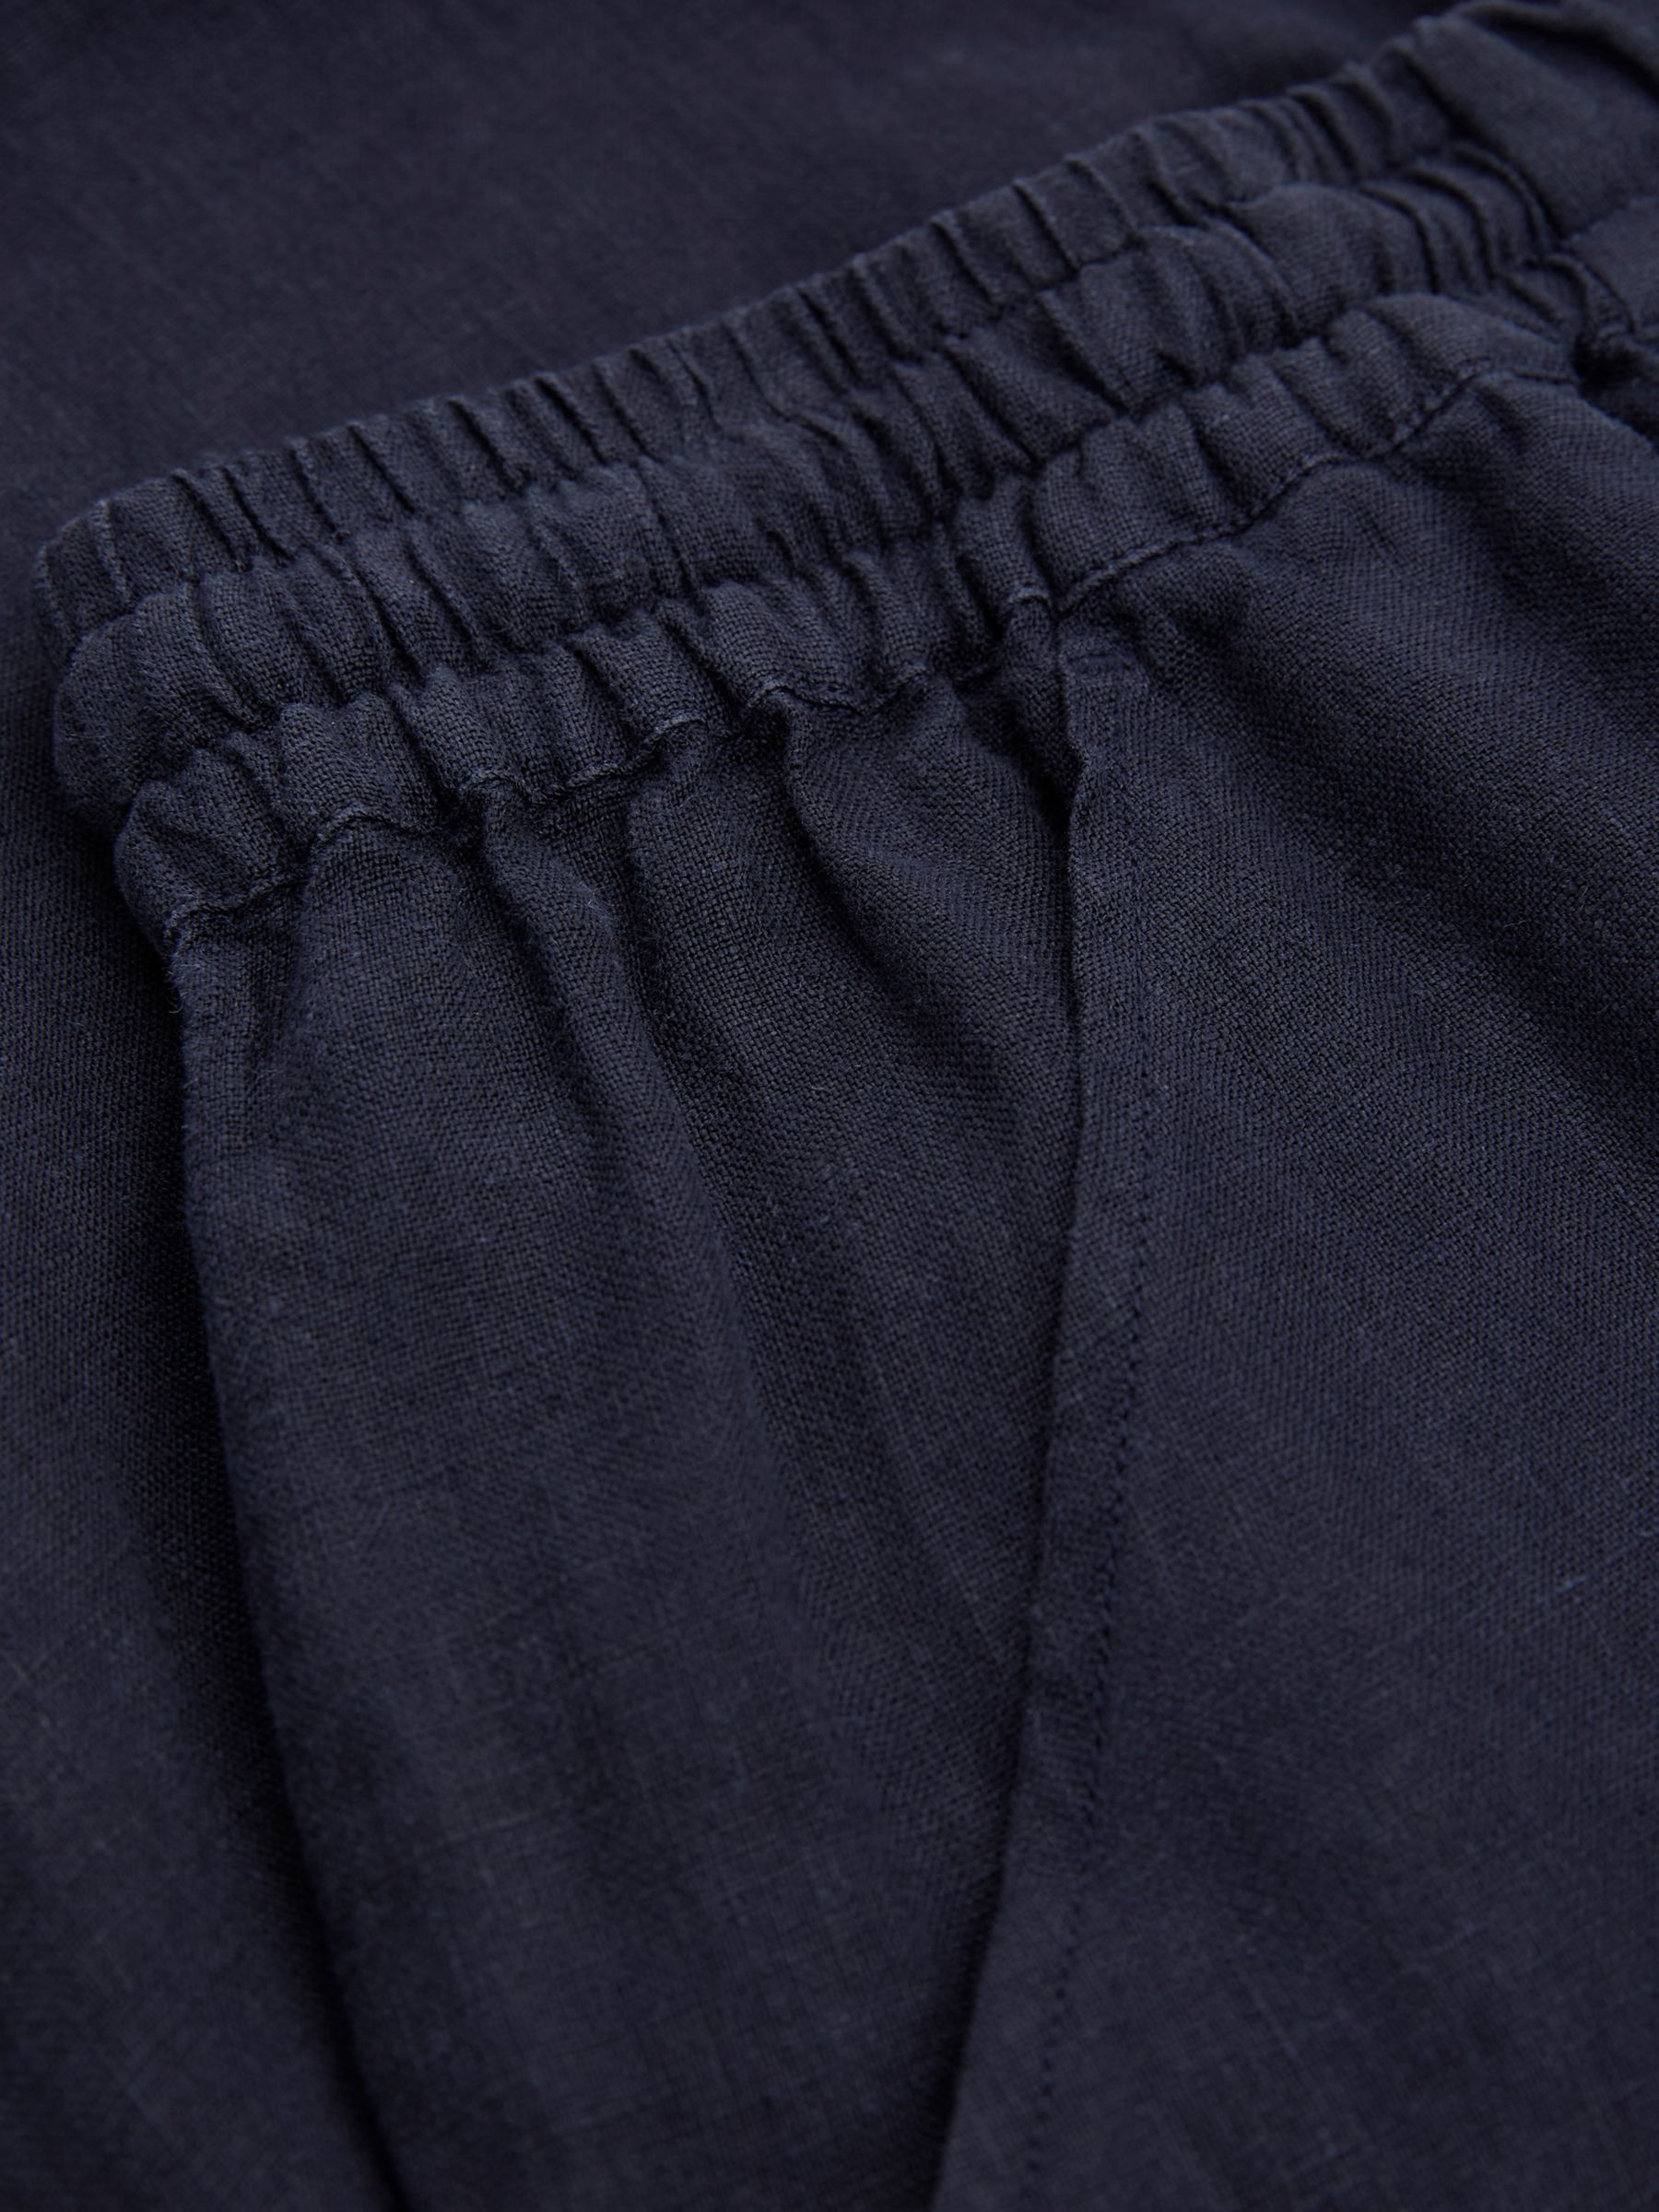 Celtic & Co. Plain Linen Woven Joggers, Dark Navy, 8